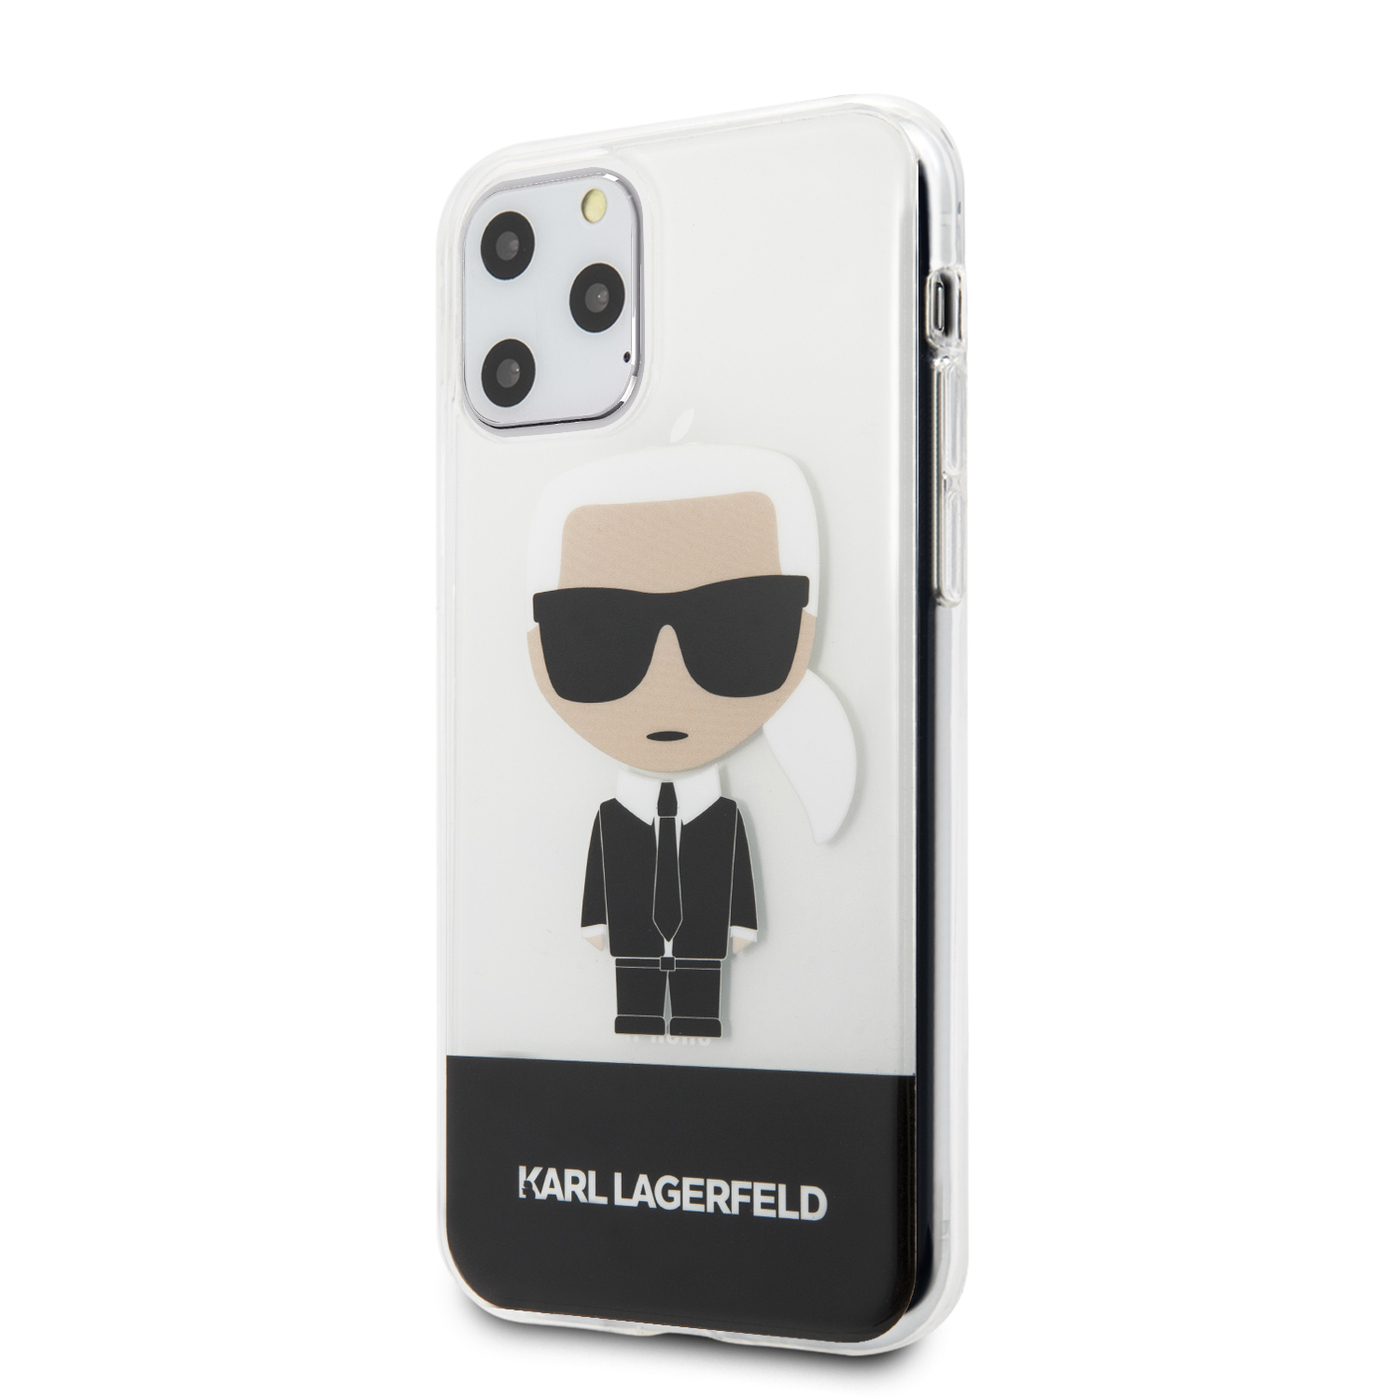 Пластиковый защитный чехол Karl Lagerfeld с рисунком на iPhone 11 Pro, проз...